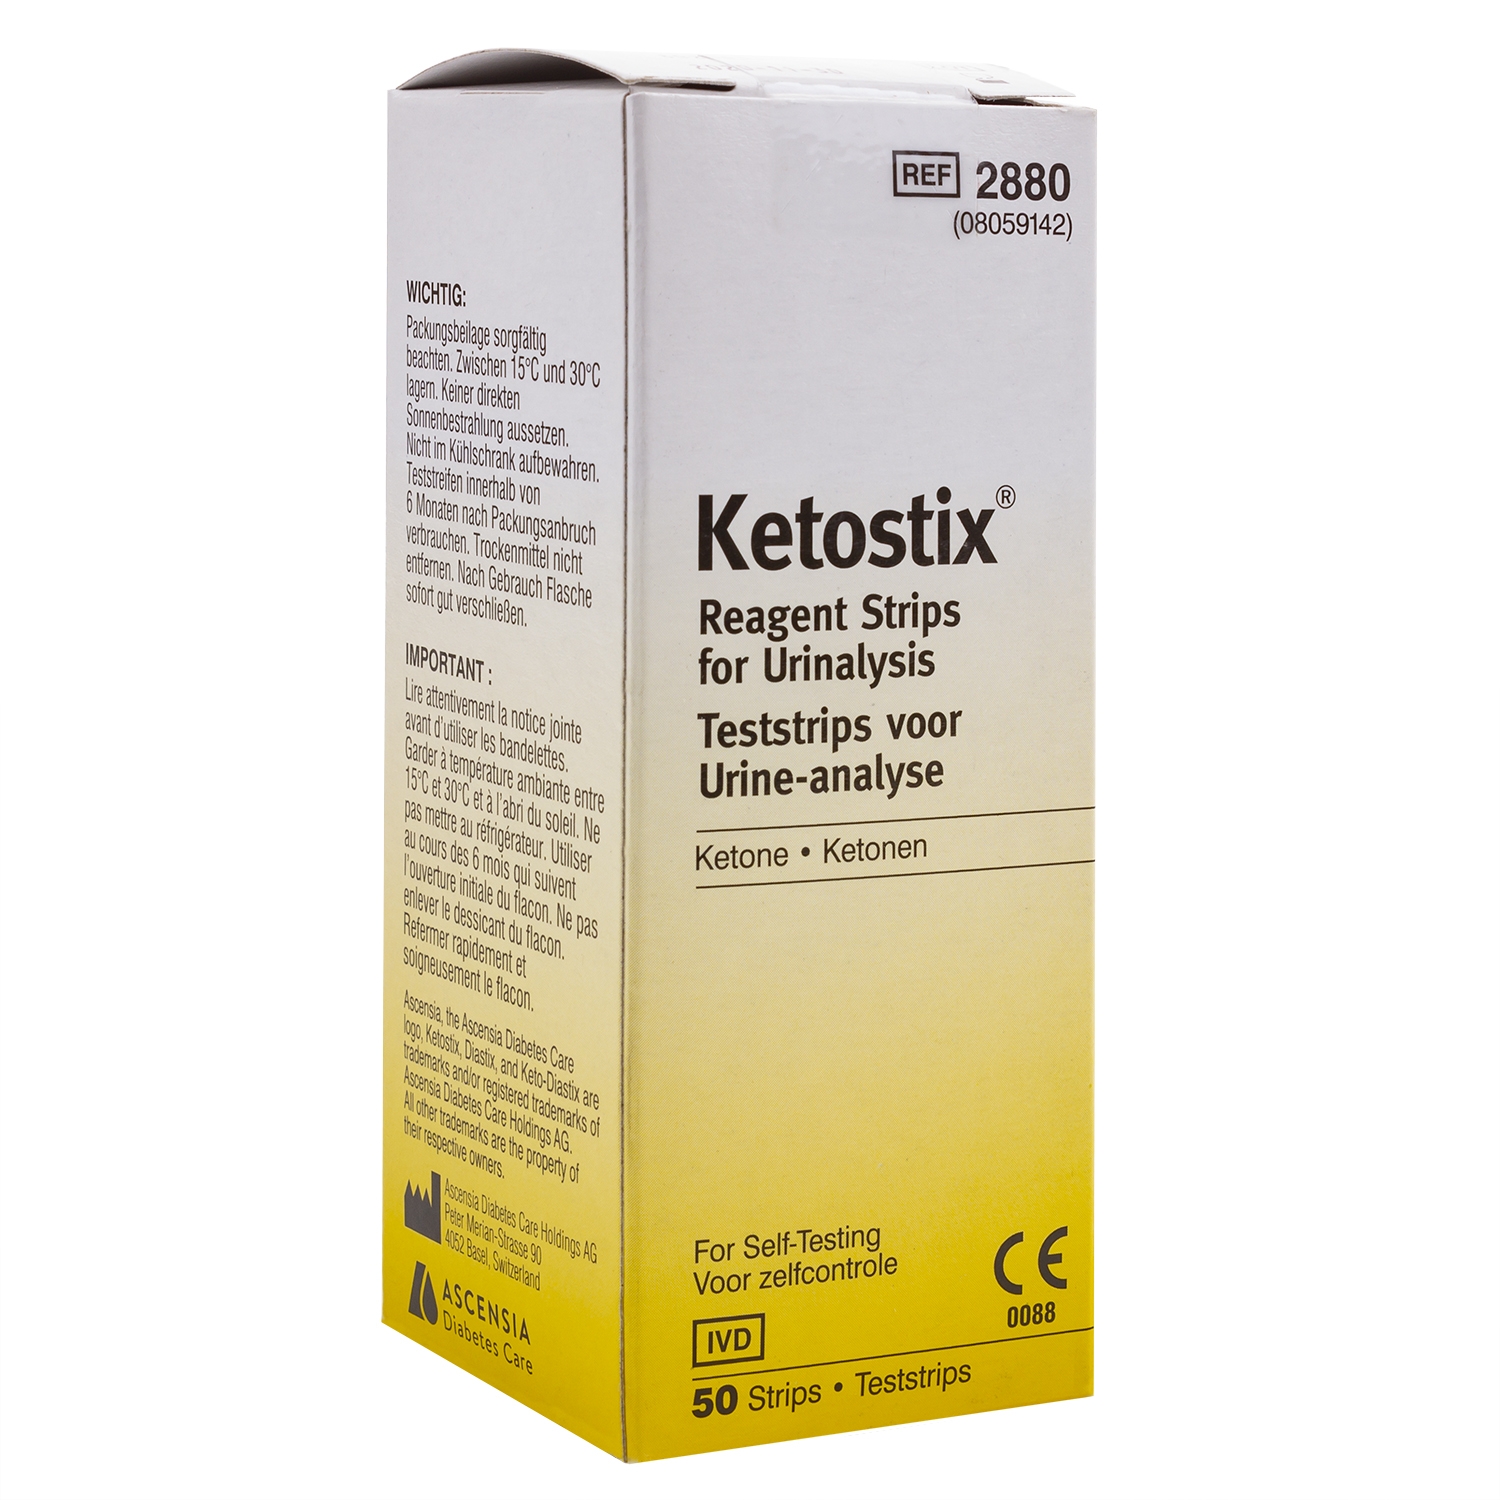 Ketostix bandelettes urine (50 pcs)